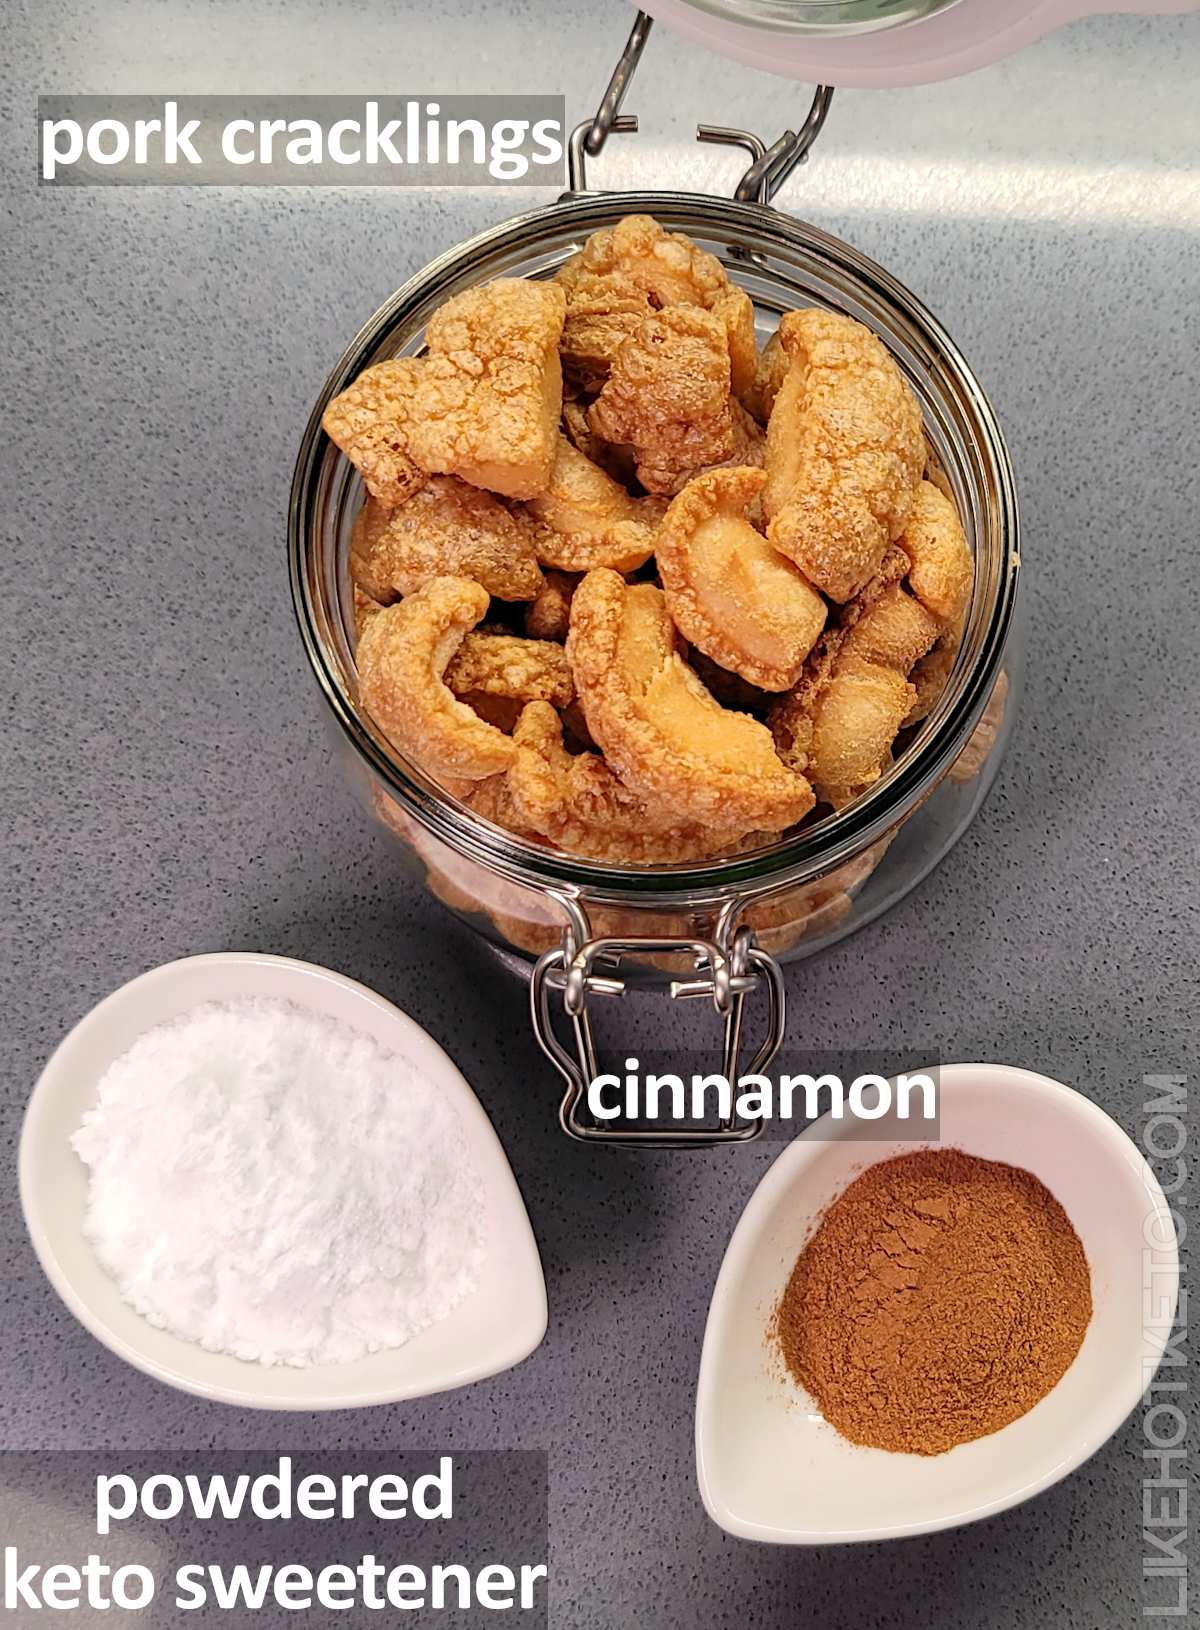 Ingredients for the keto cinnamon crunch cereal: pork cracklings, cinnamon and powdered sweetener.